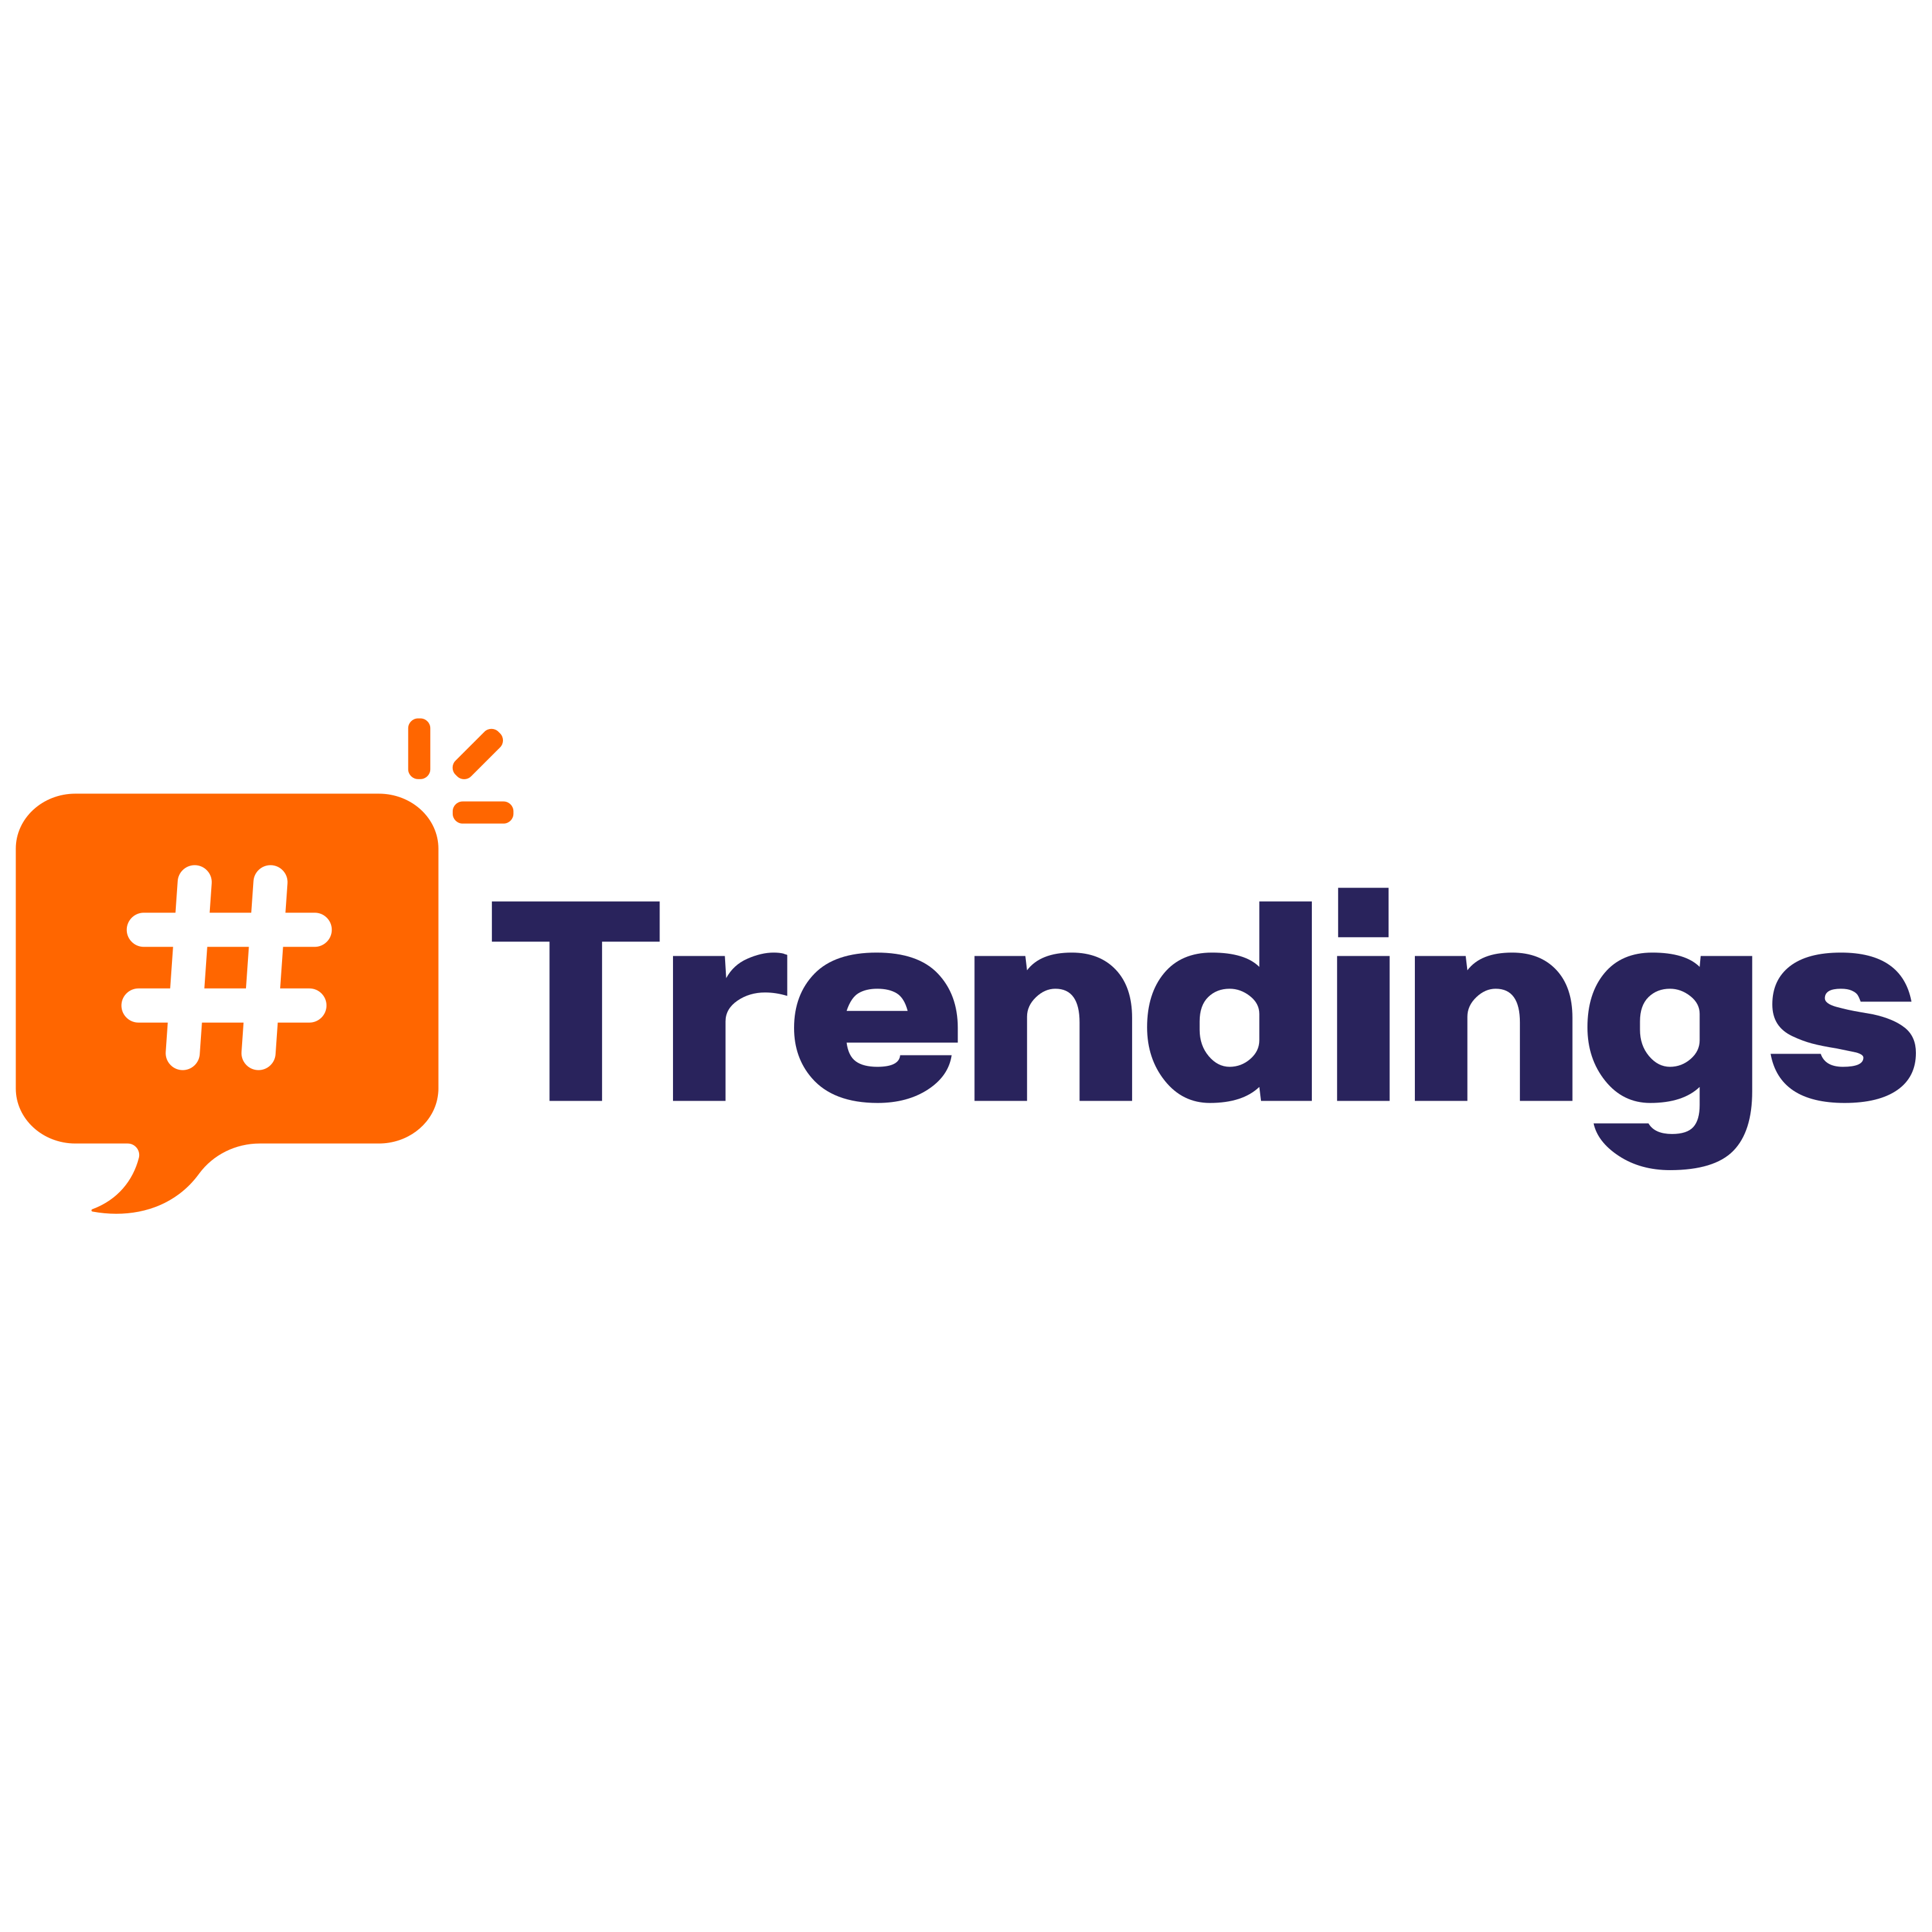 Trendings Logo Transparent Image